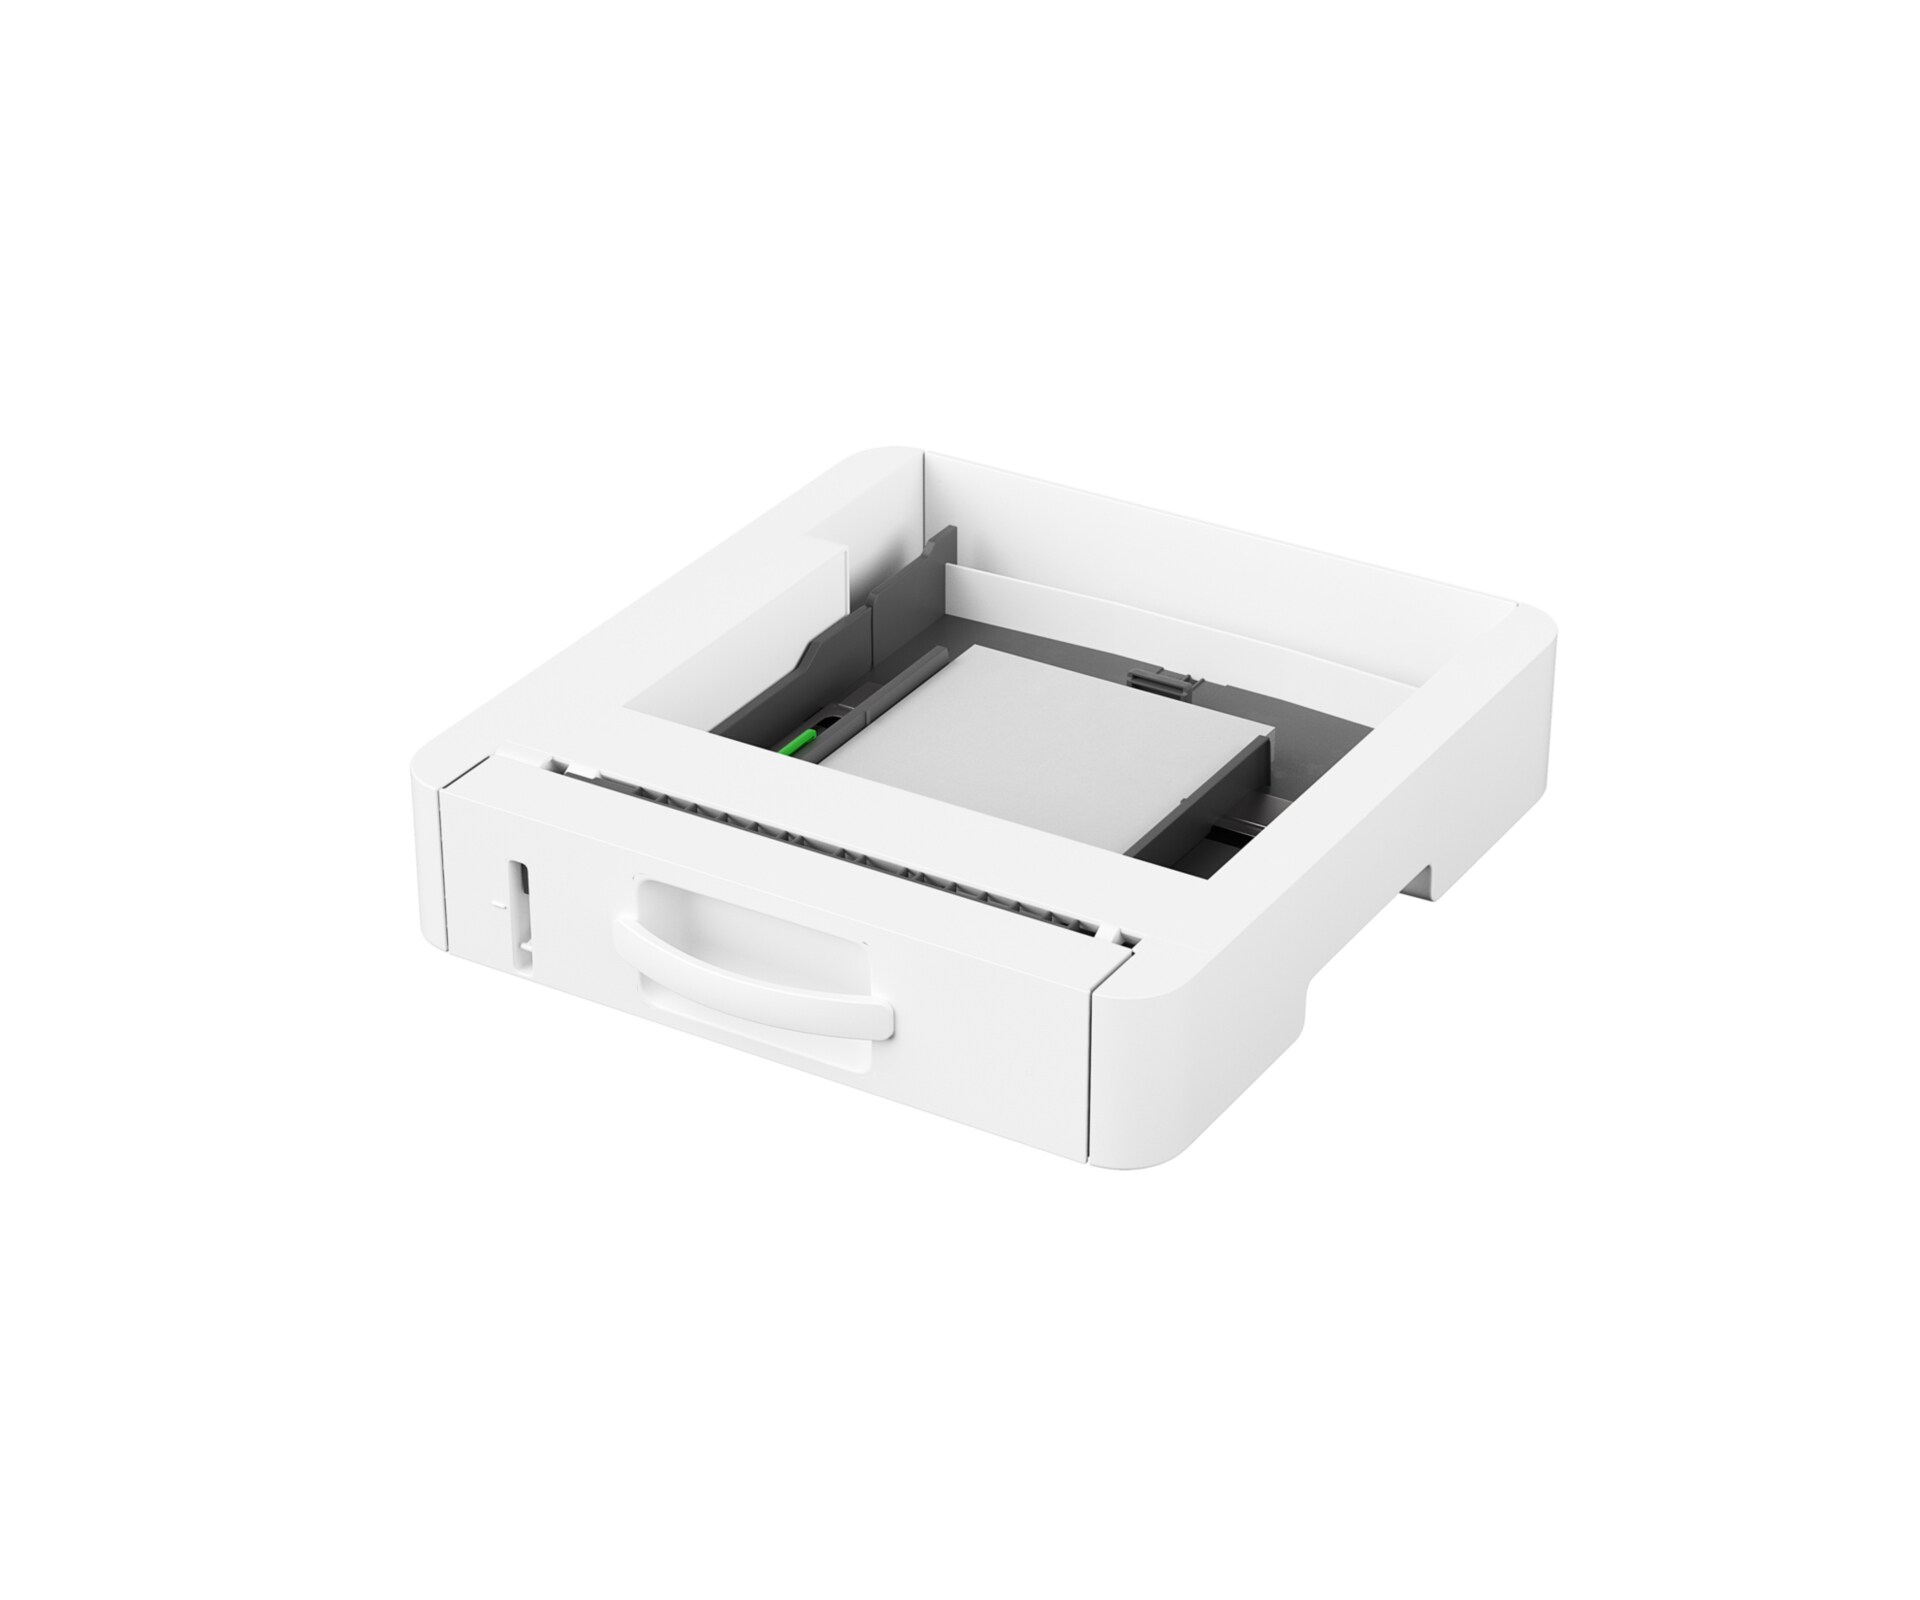 Ricoh PB 1130 - printer paper feed unit - 250 sheets